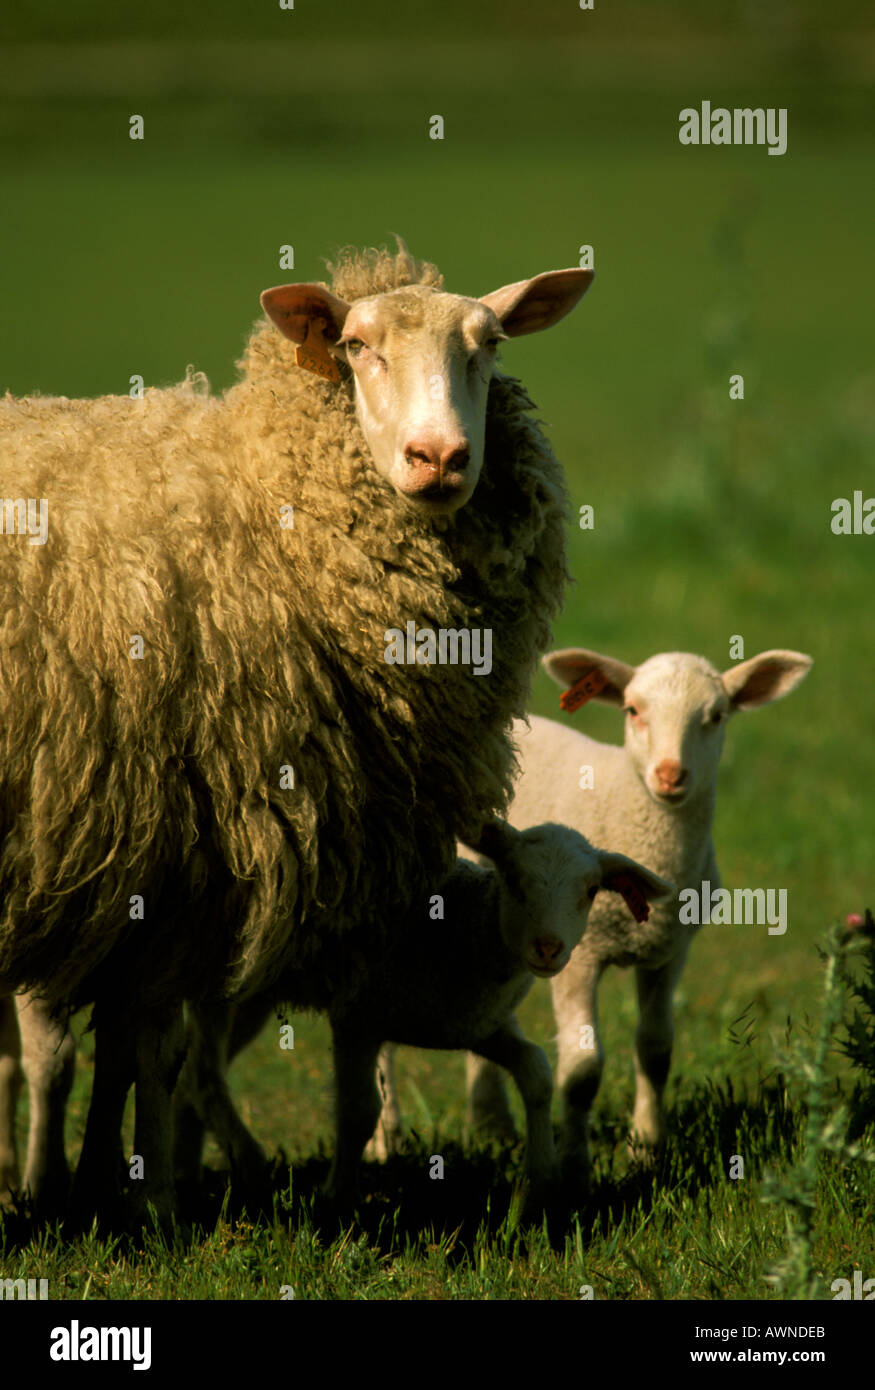 Granja de ovejas, Condado de Sonoma California Foto de stock